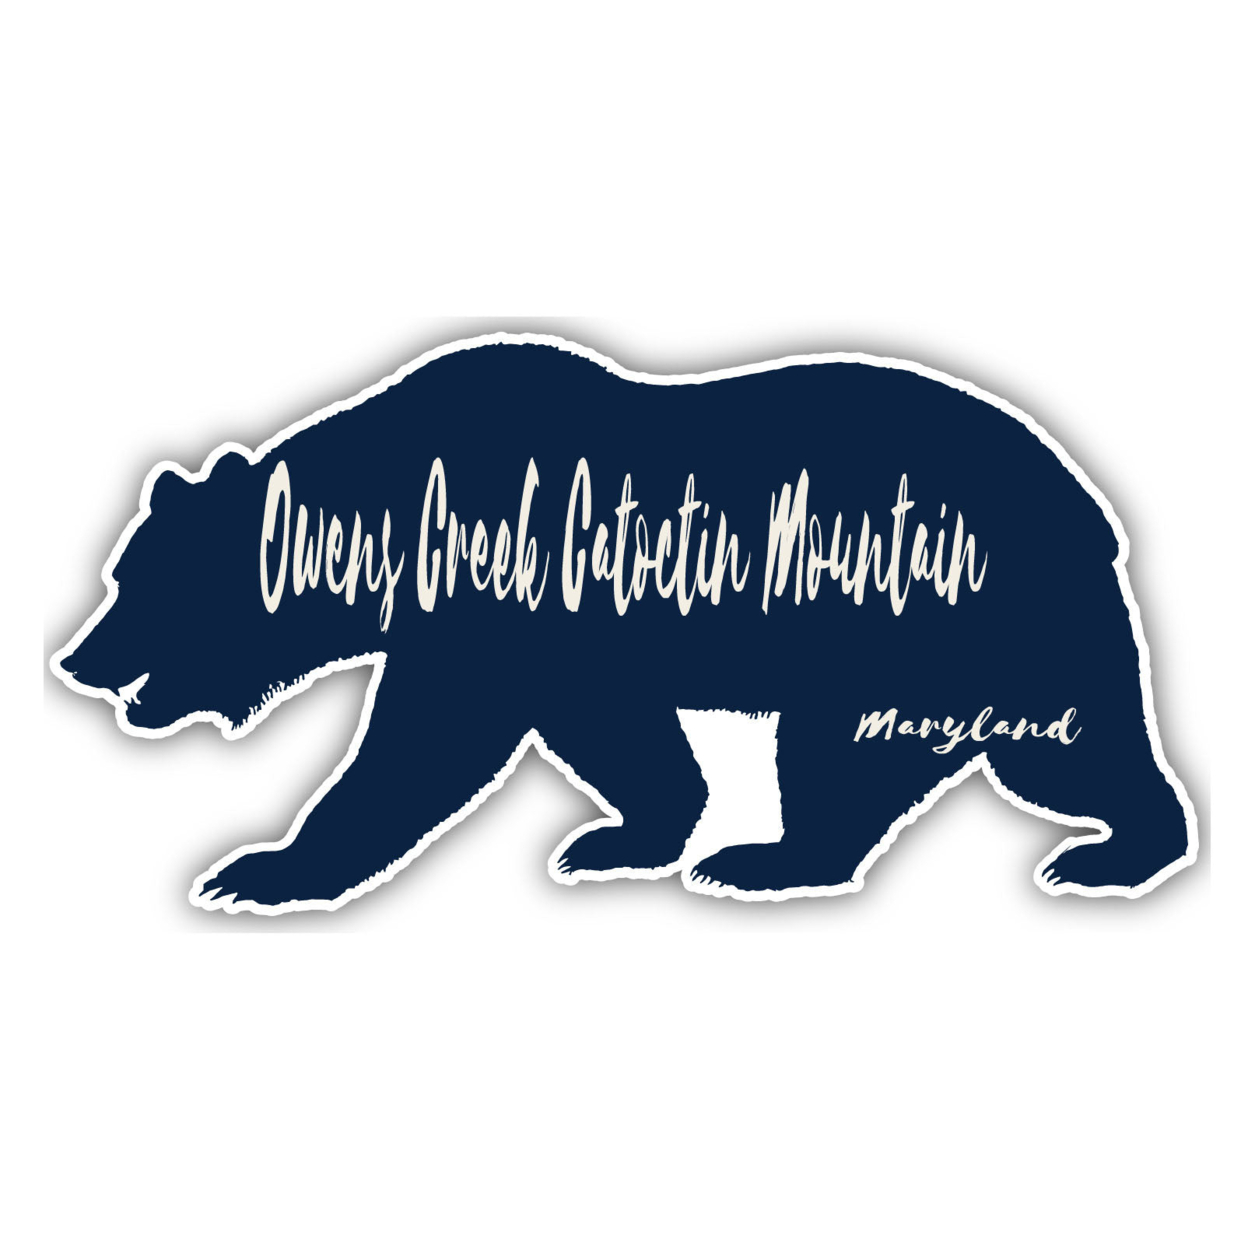 Owens Creek Catoctin Mountain Maryland Souvenir Decorative Stickers (Choose Theme And Size) - Single Unit, 4-Inch, Bear